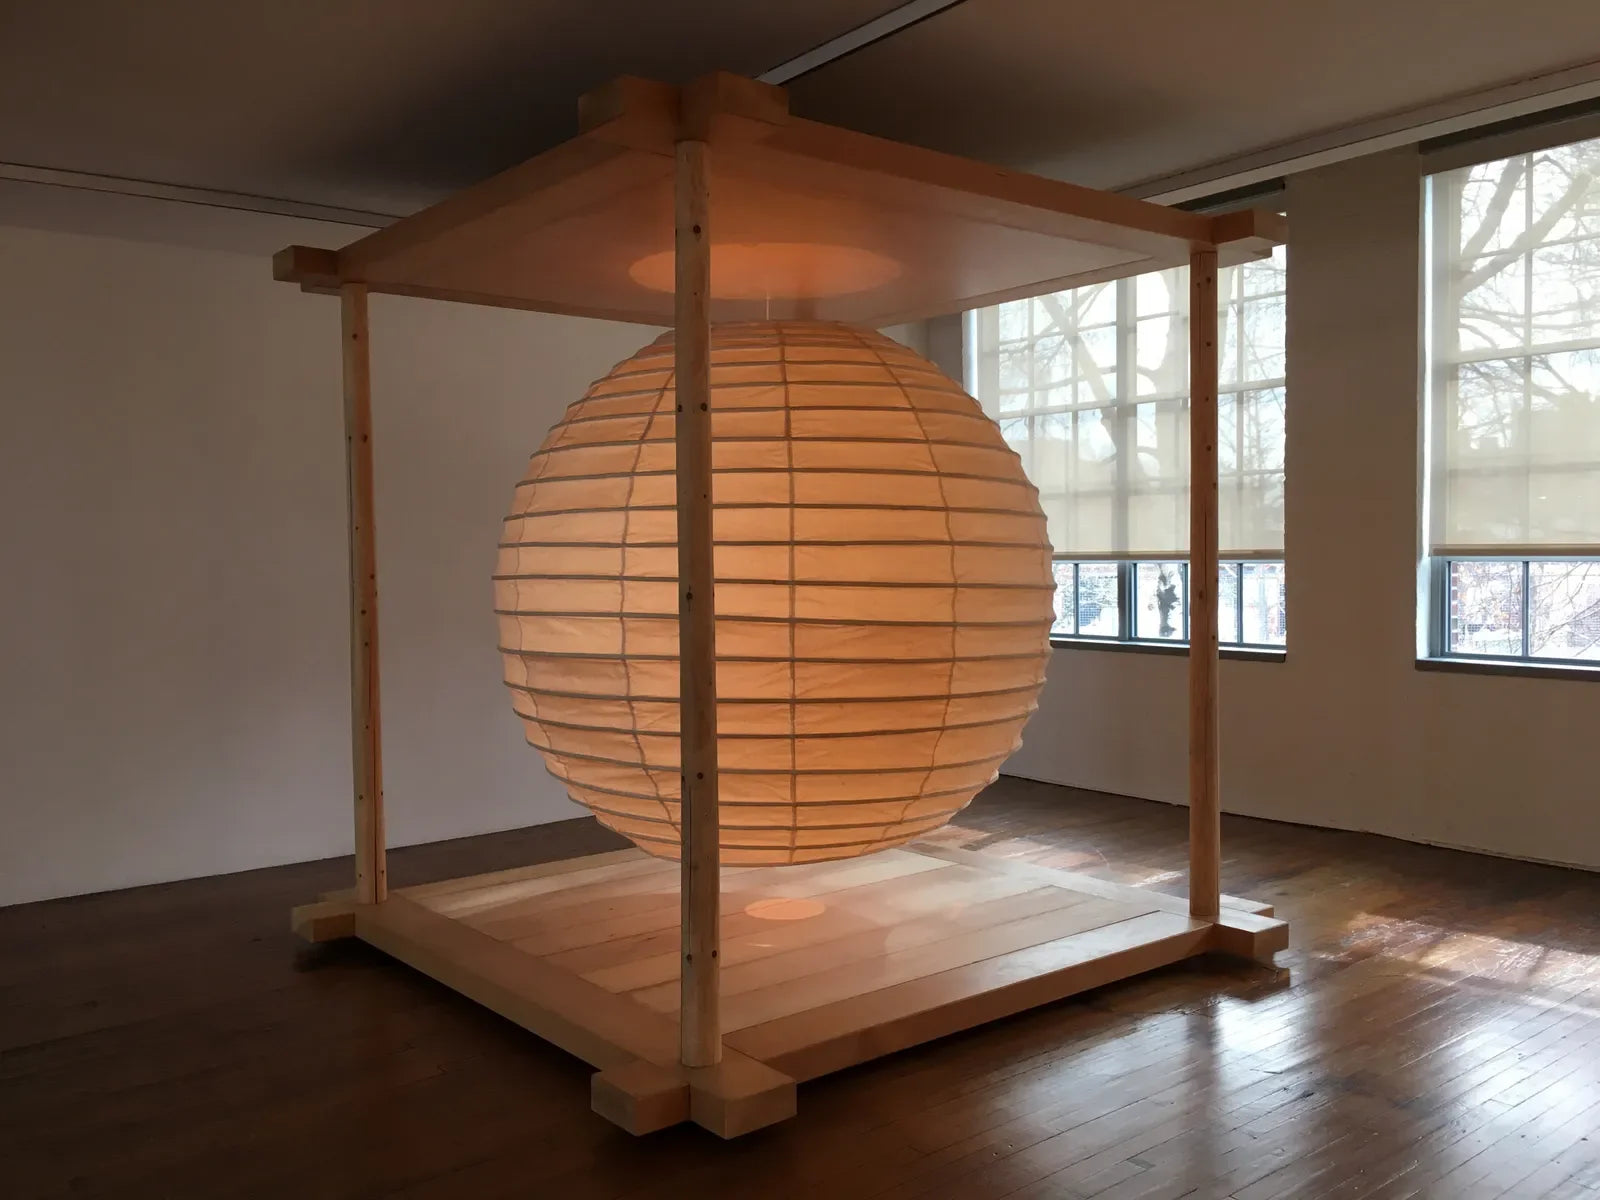 Ceiling Light Fixture For Living Room Bedroom | Noguchi Lamps Lanterns | White Rice Paper | Casalola - Pendant Lamps